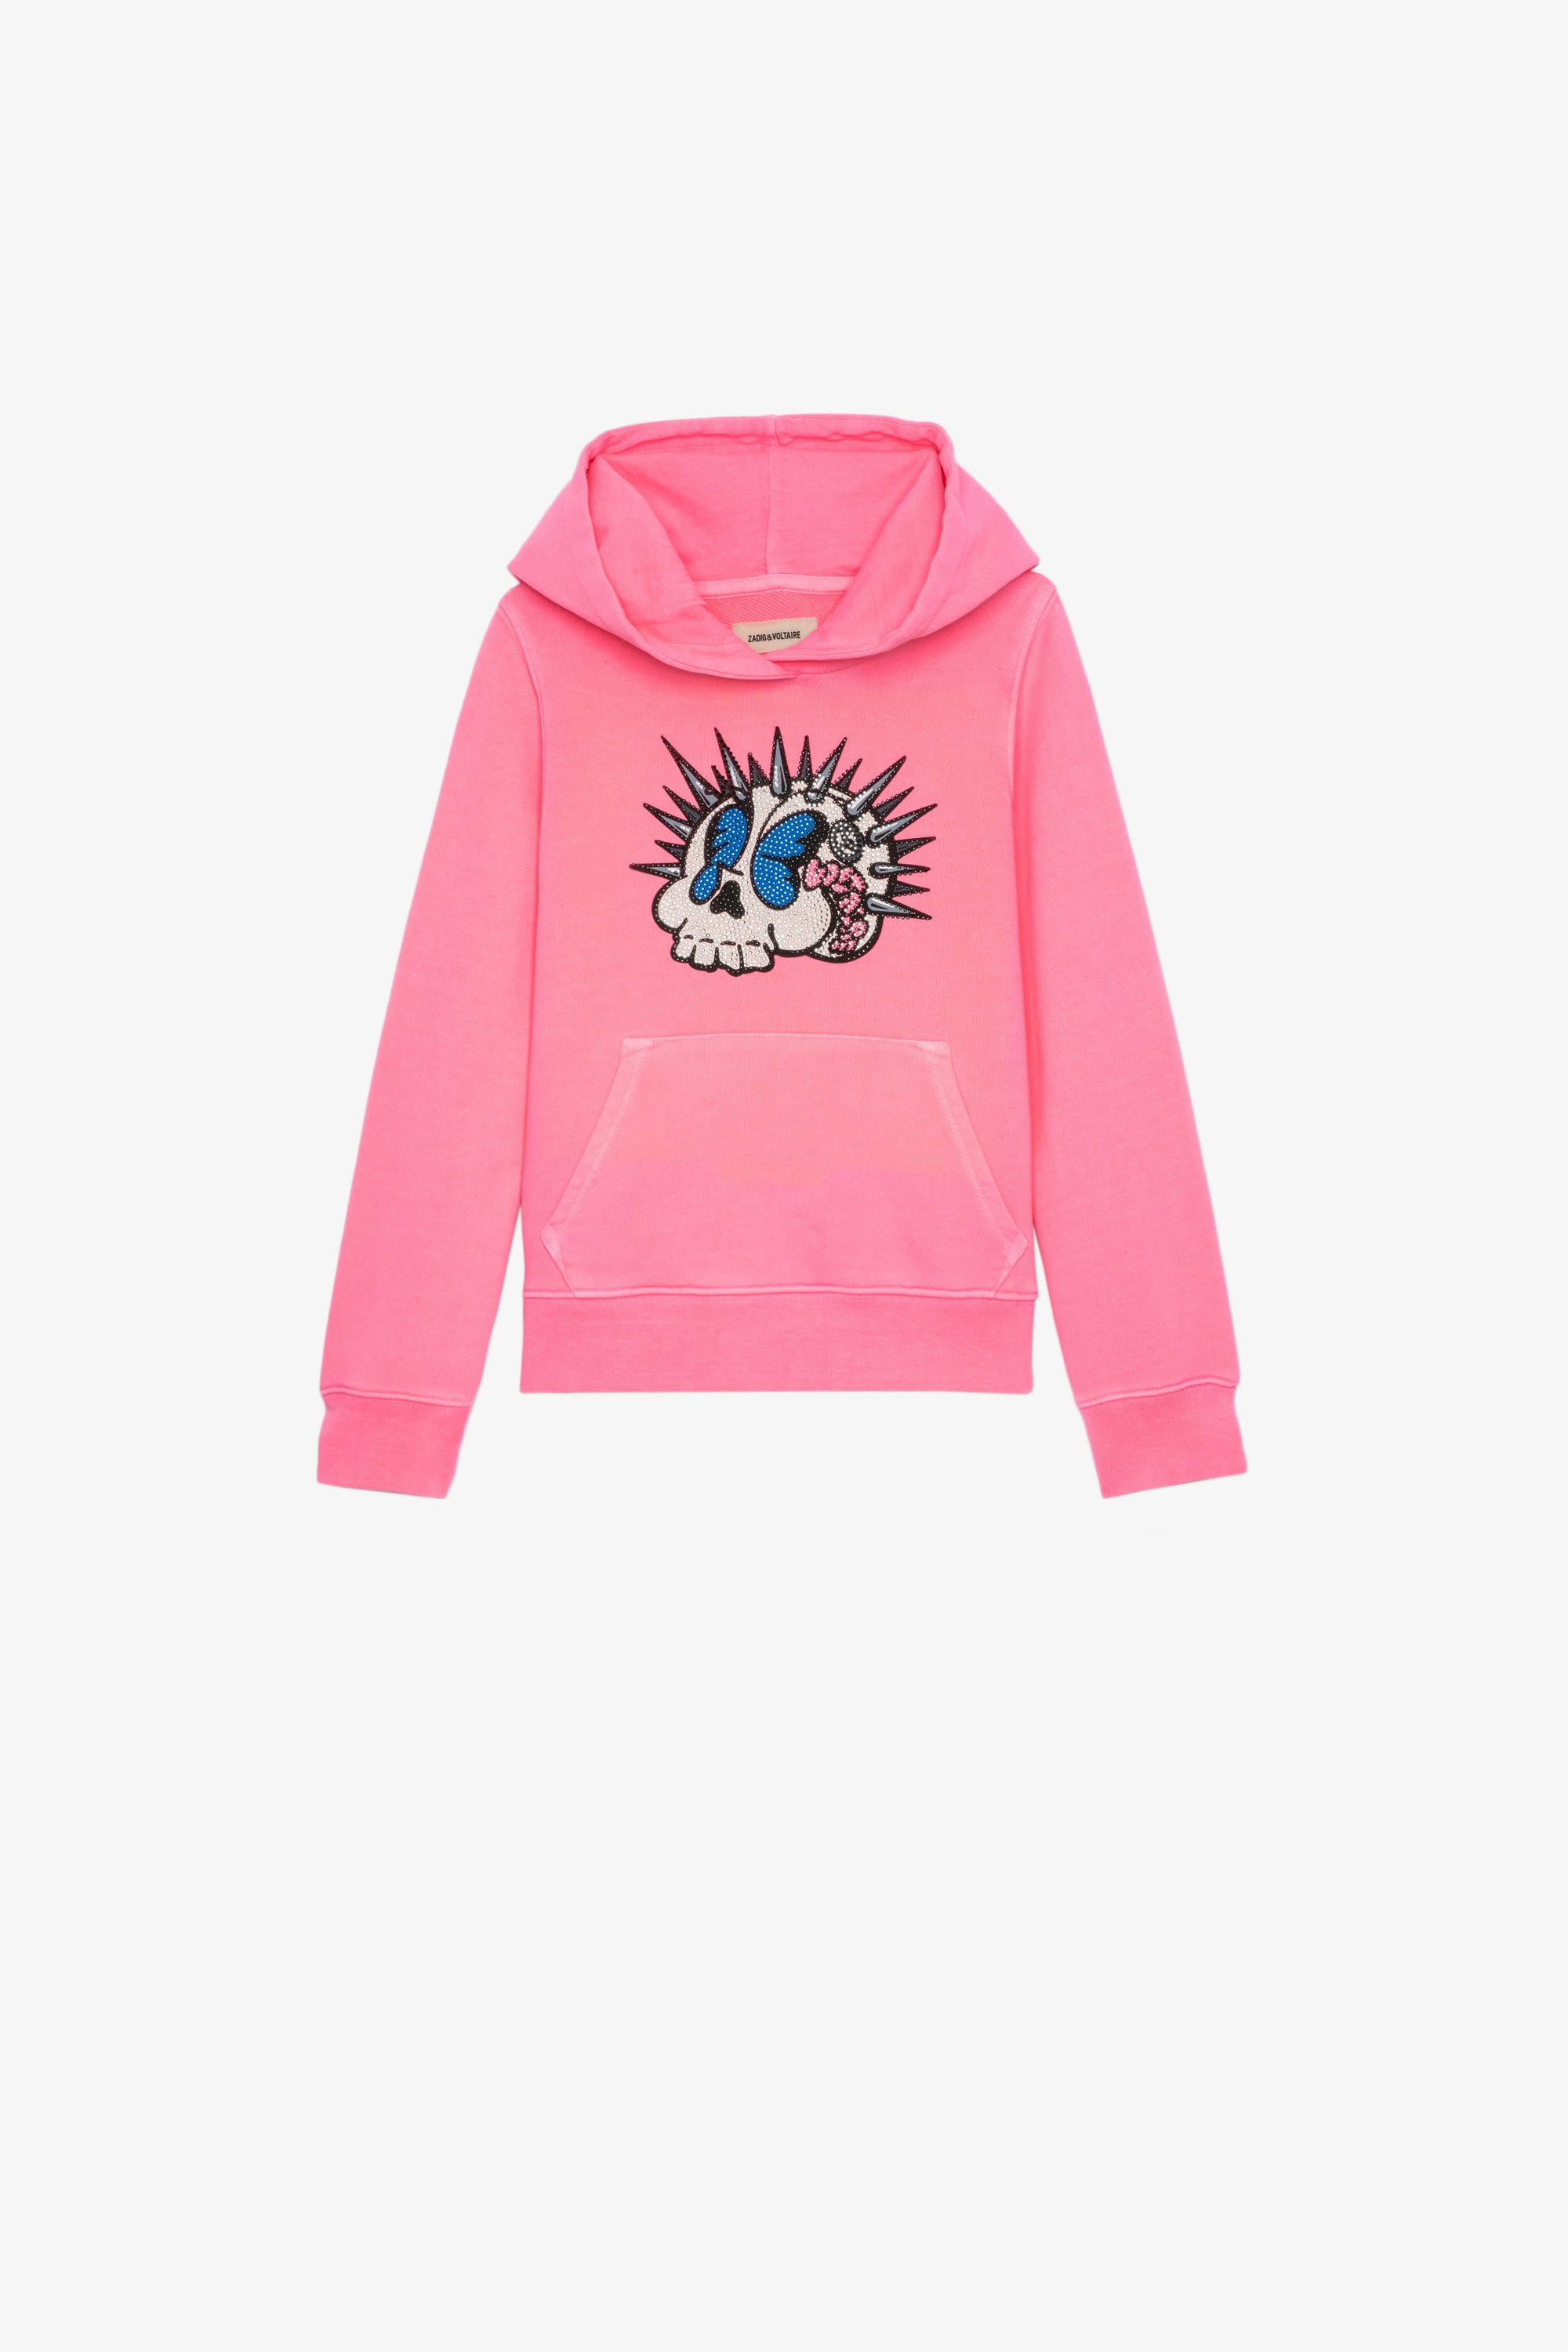 Spencer Kids' Sweatshirt Kids’ hoodie in pink cotton with a metallic-effect crystal-studded skull print